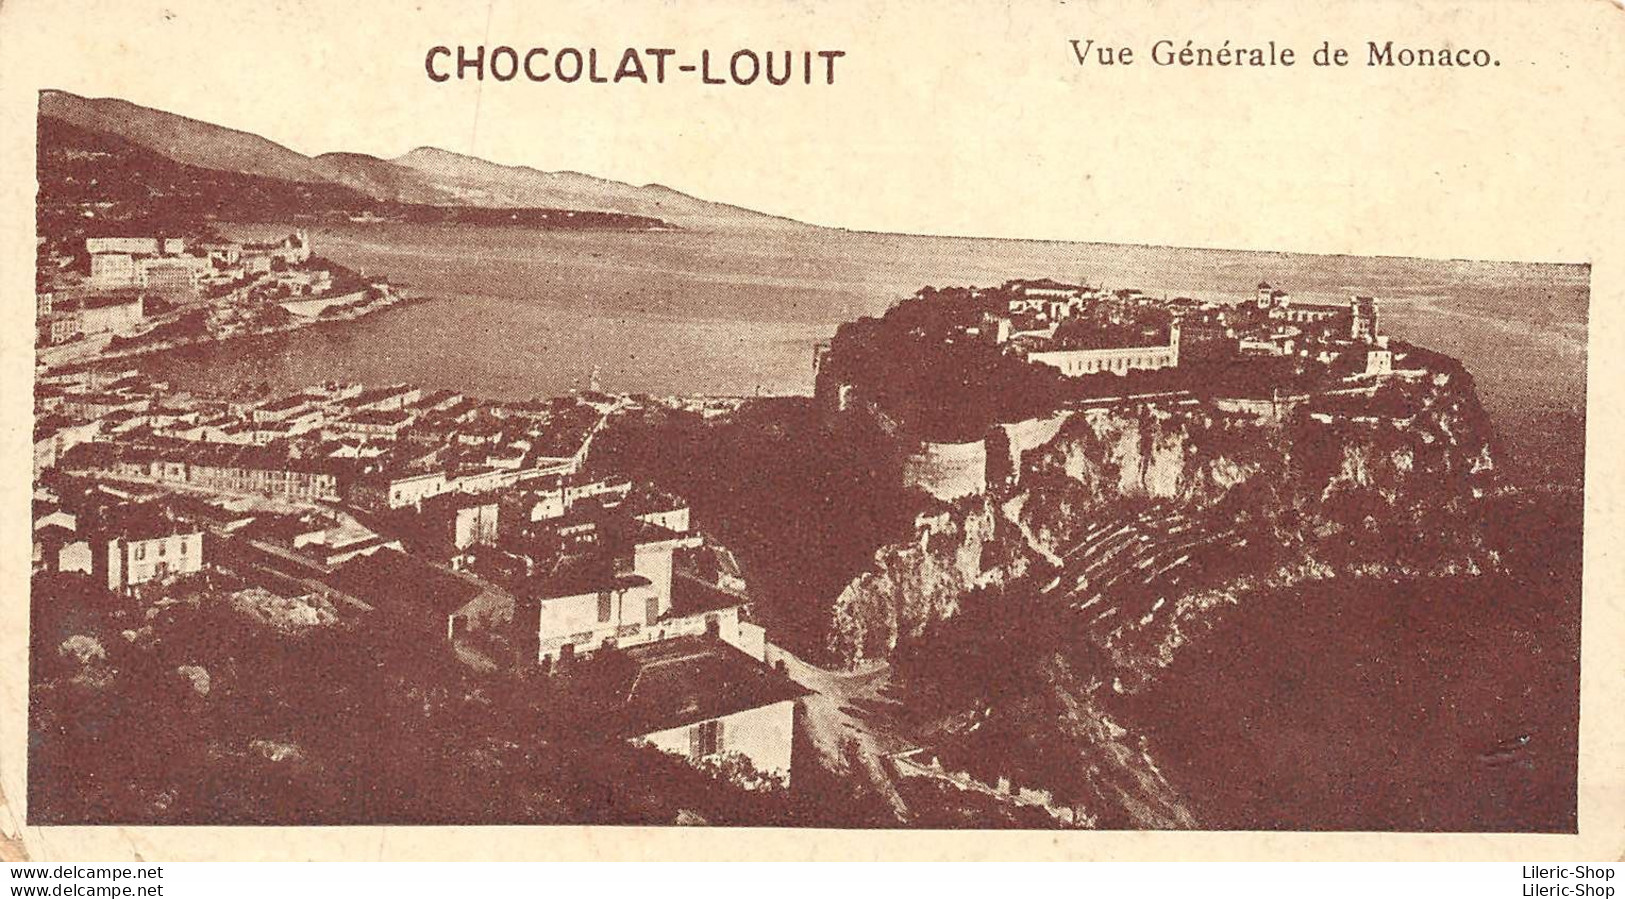 4 VINTAGE ADVERTISING POSTCARDS " CHOCOLAT-LOUIT 130X71 " BRUXELLES ATHÈNES NORVÈGE MONACO - Werbepostkarten